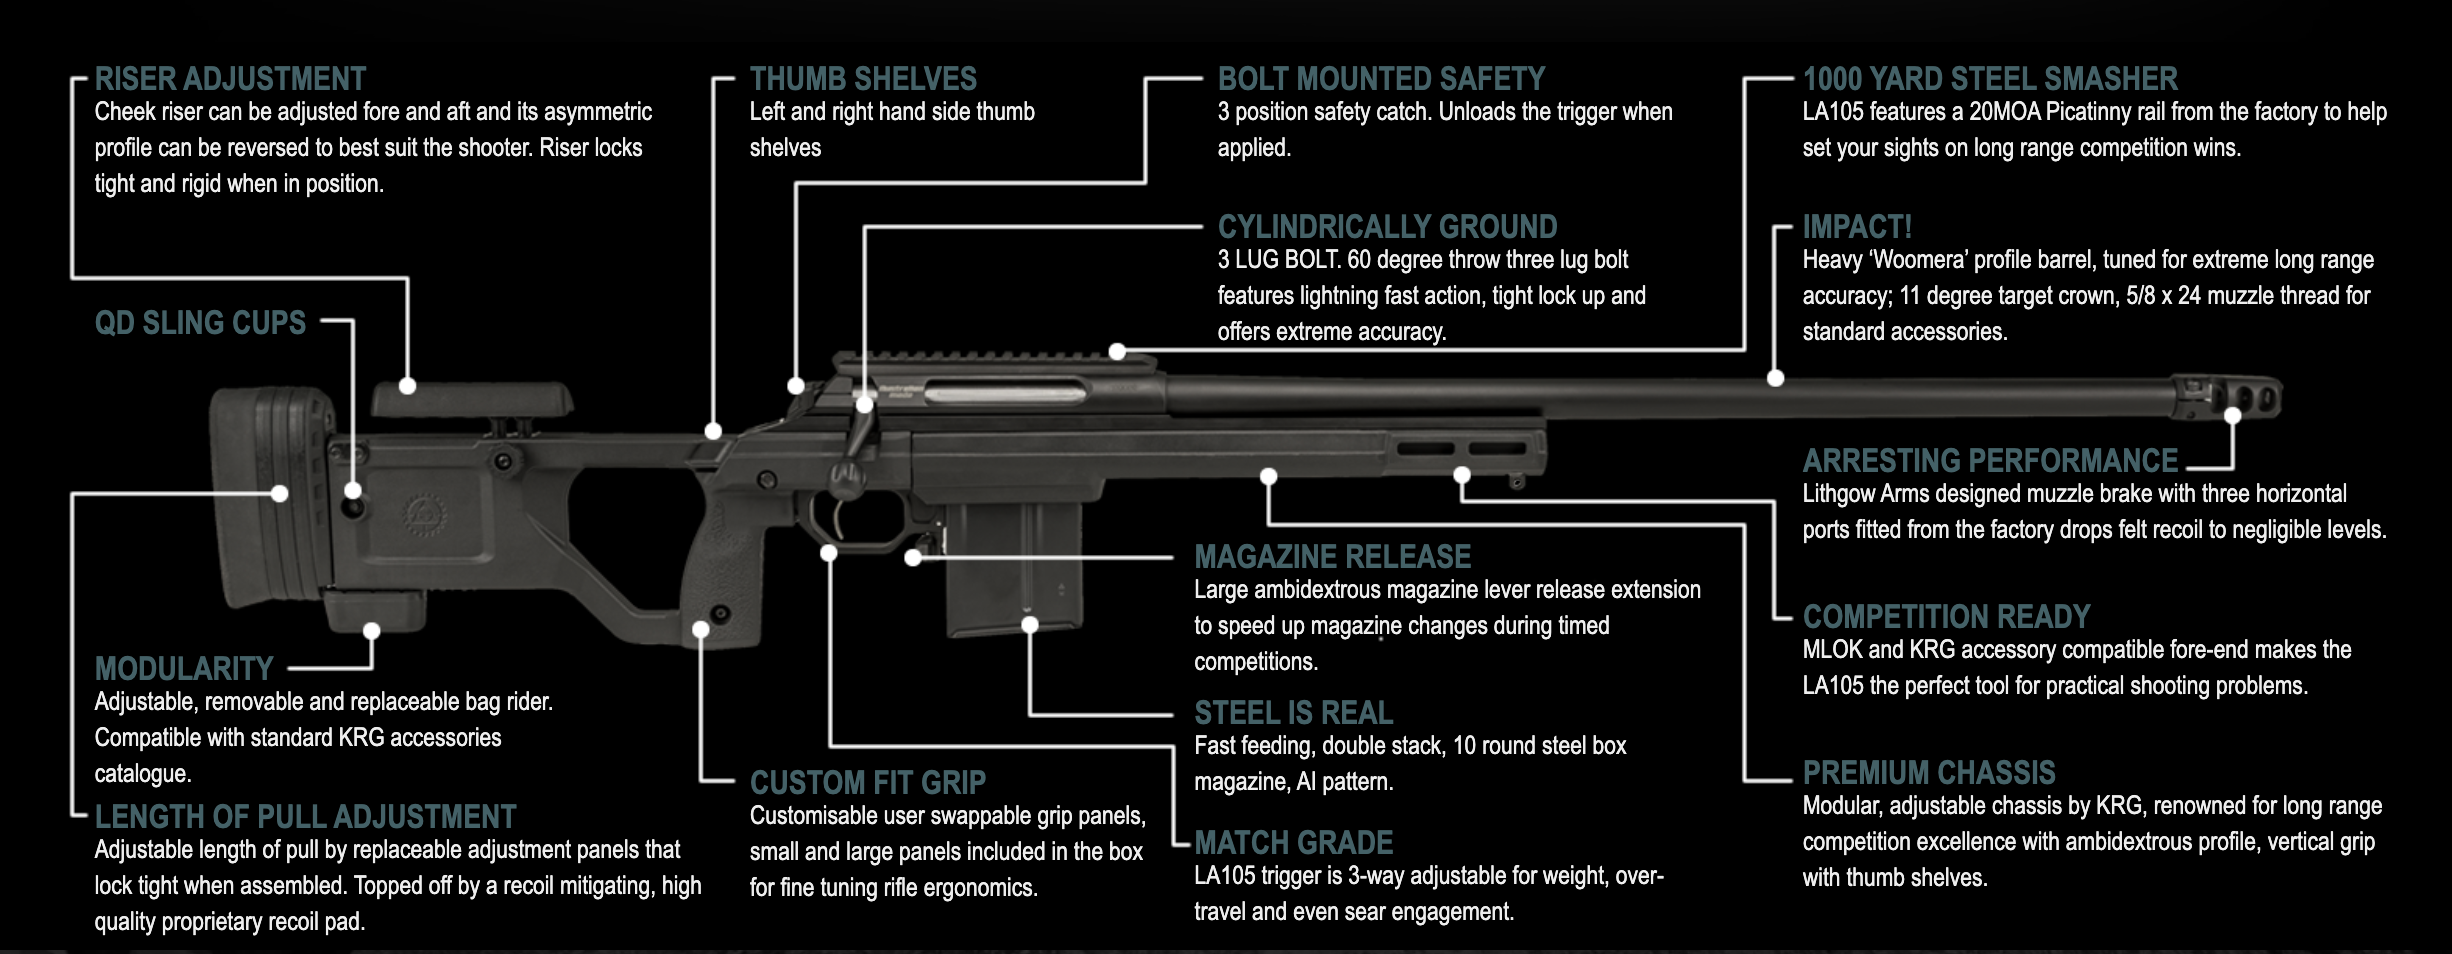 lithgow-la105-rifle-breakdown.png